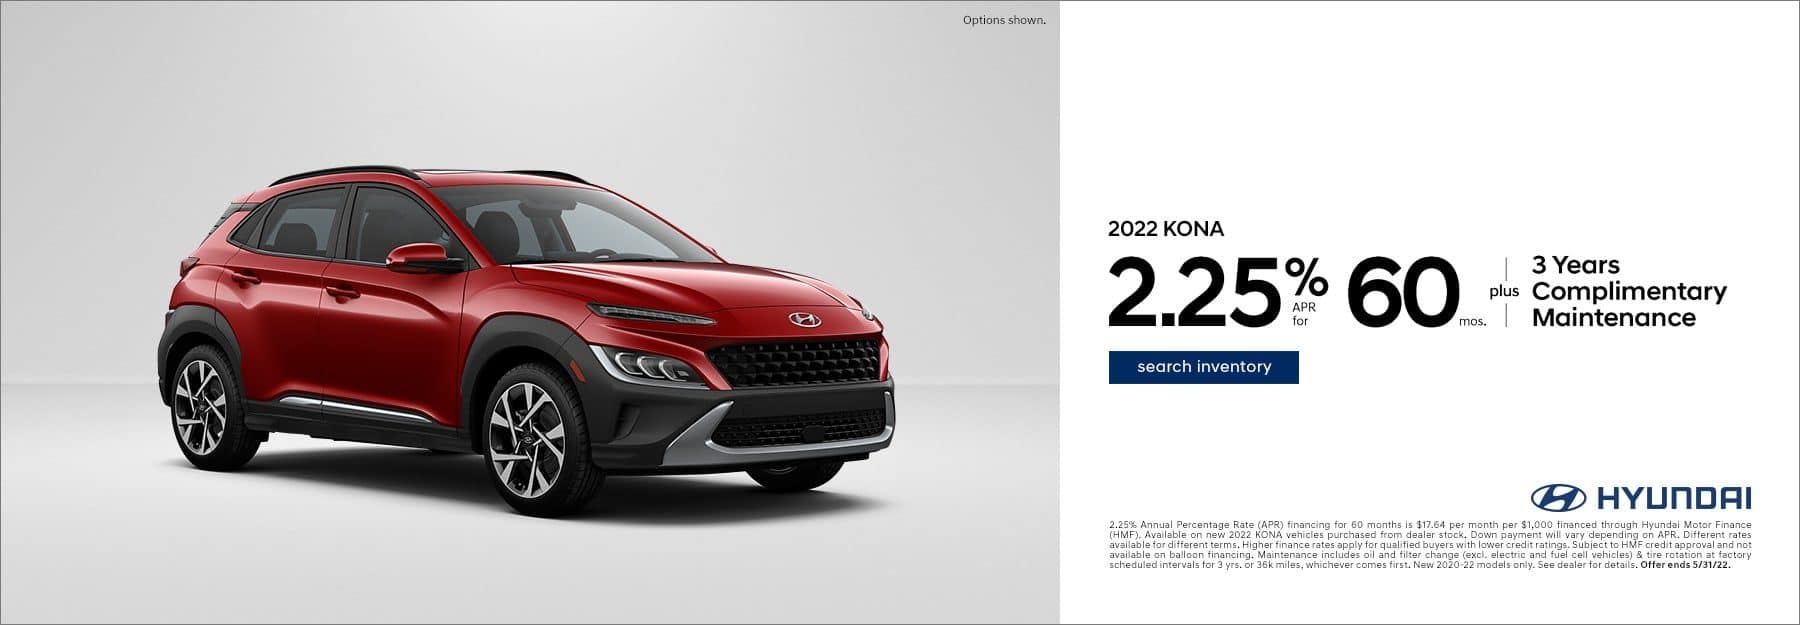 2022 Hyundai Kona offer